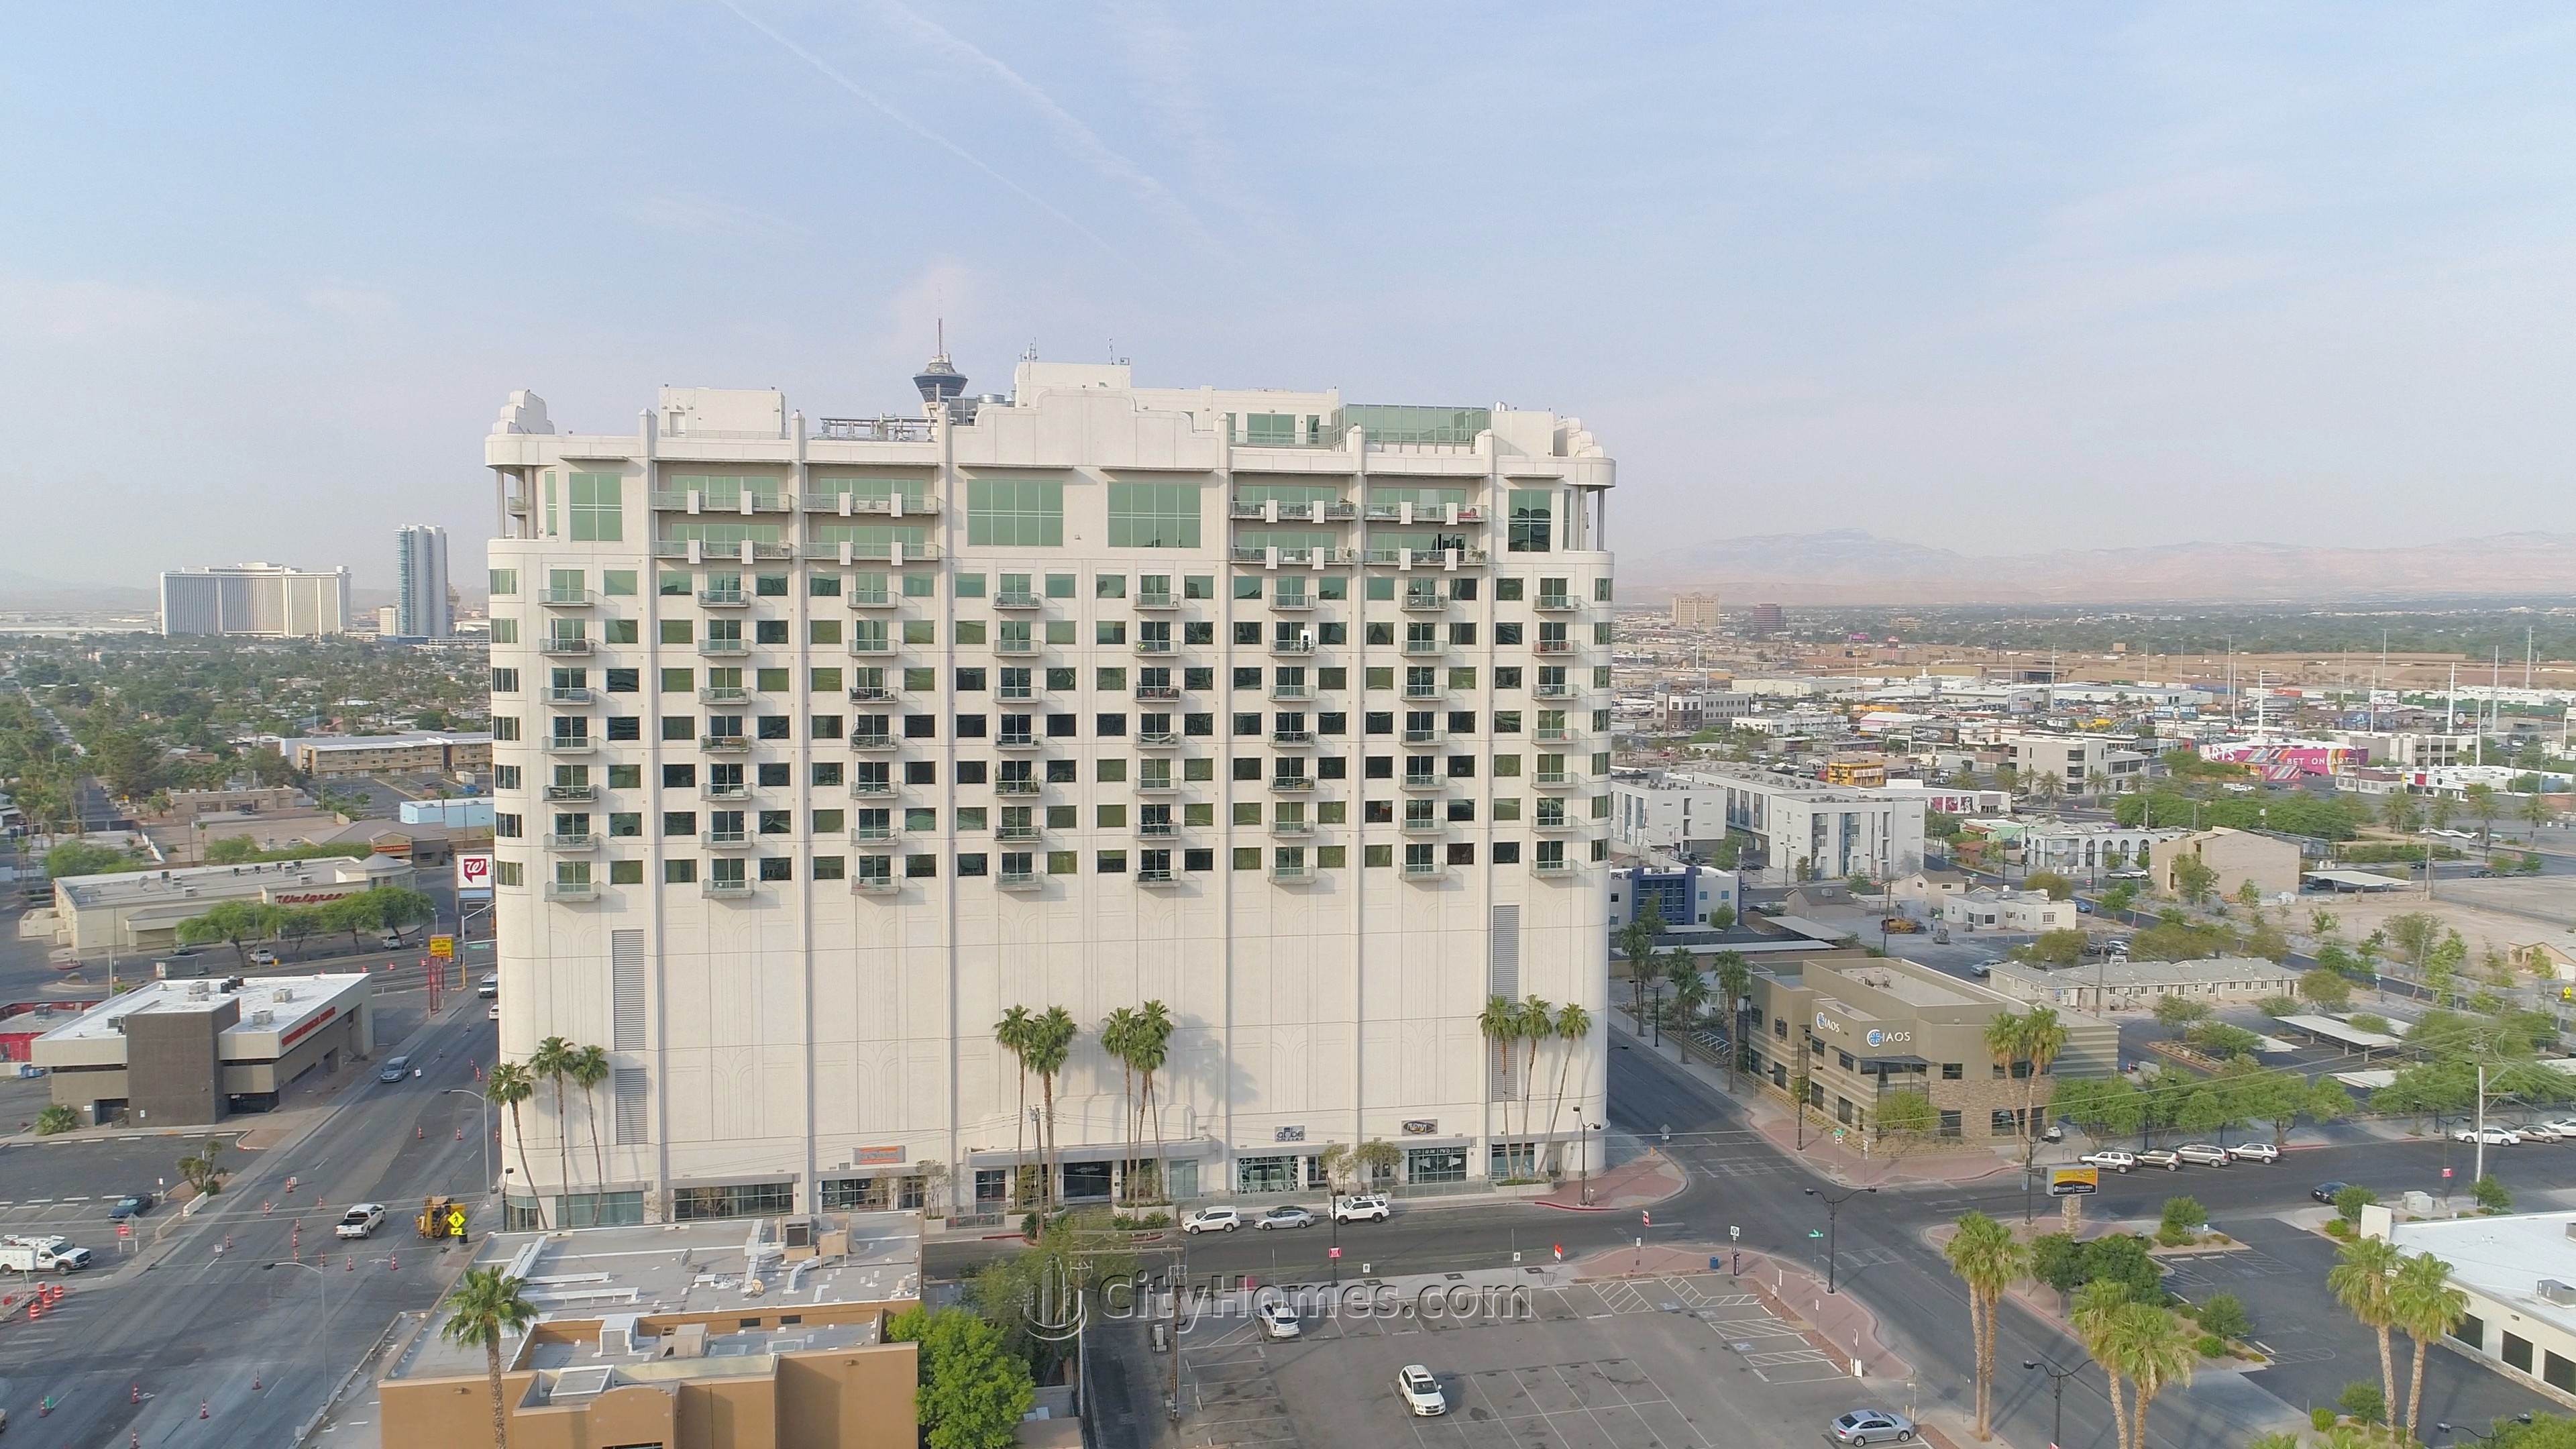 3. Soho Lofts building at 900 S Las Vegas Blvd, Las Vegas, NV 89101